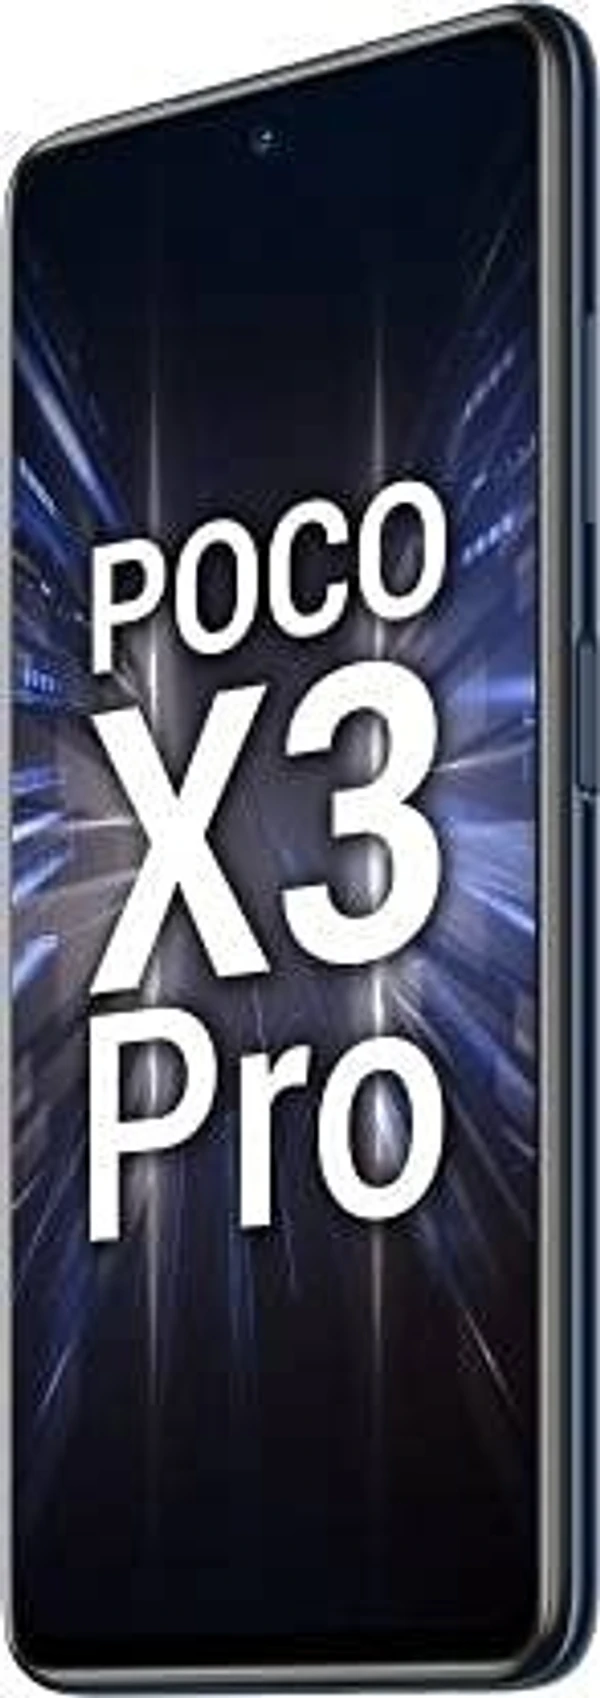 Poco X3 Pro (8GB RAM, 128GB Storage) - Phantom Black